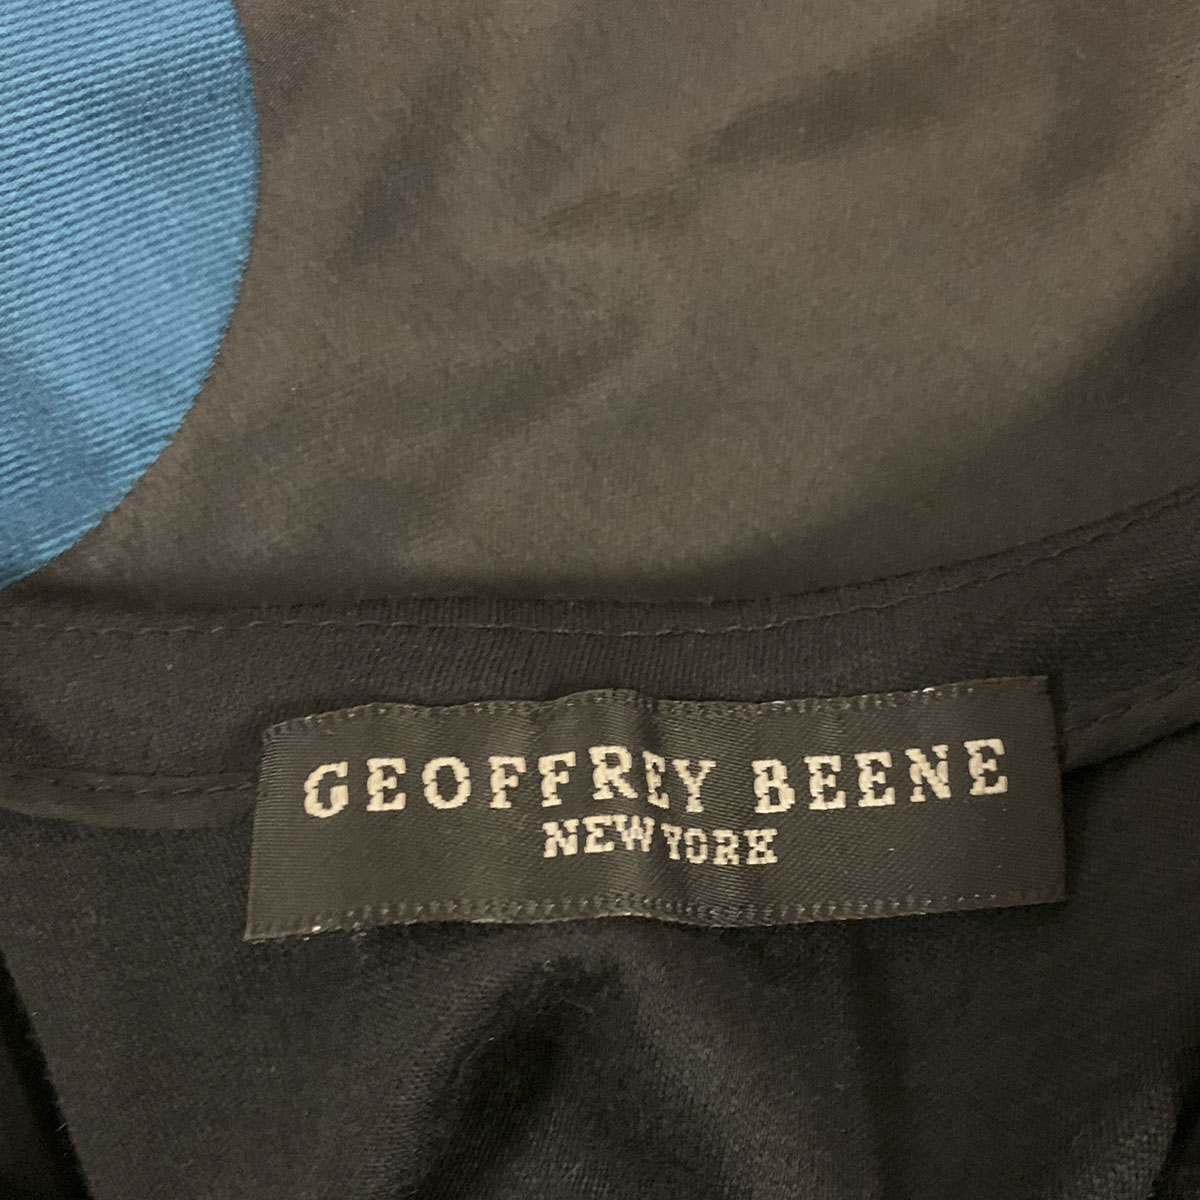 1980s GeoffreyBeene label